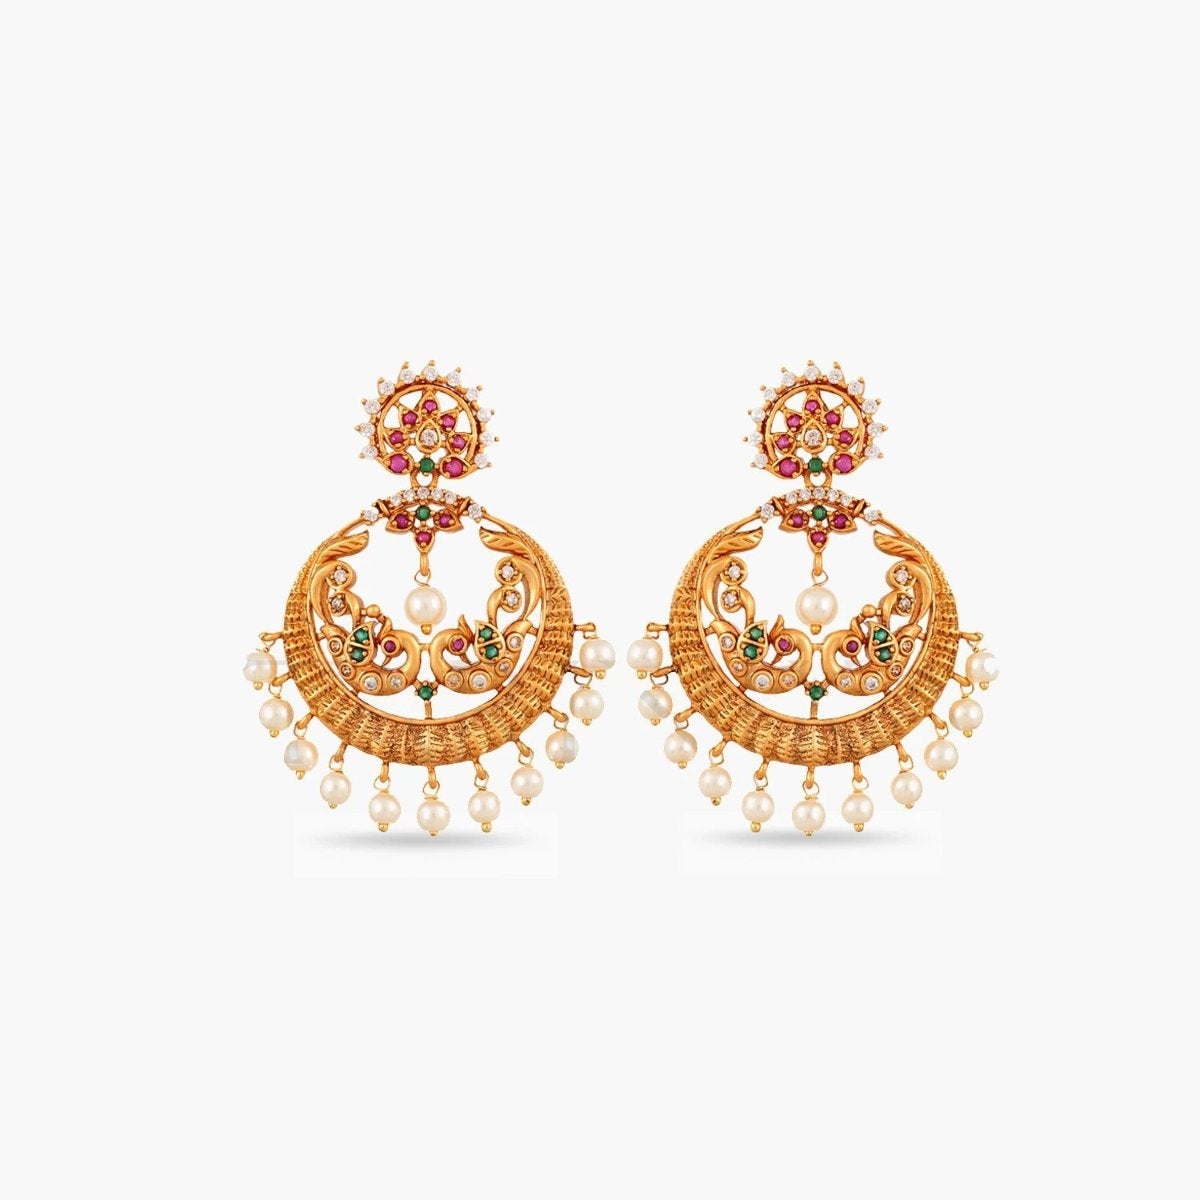 1 gram gold plated chand bali ear rings with jhumka – The Raj Ratna